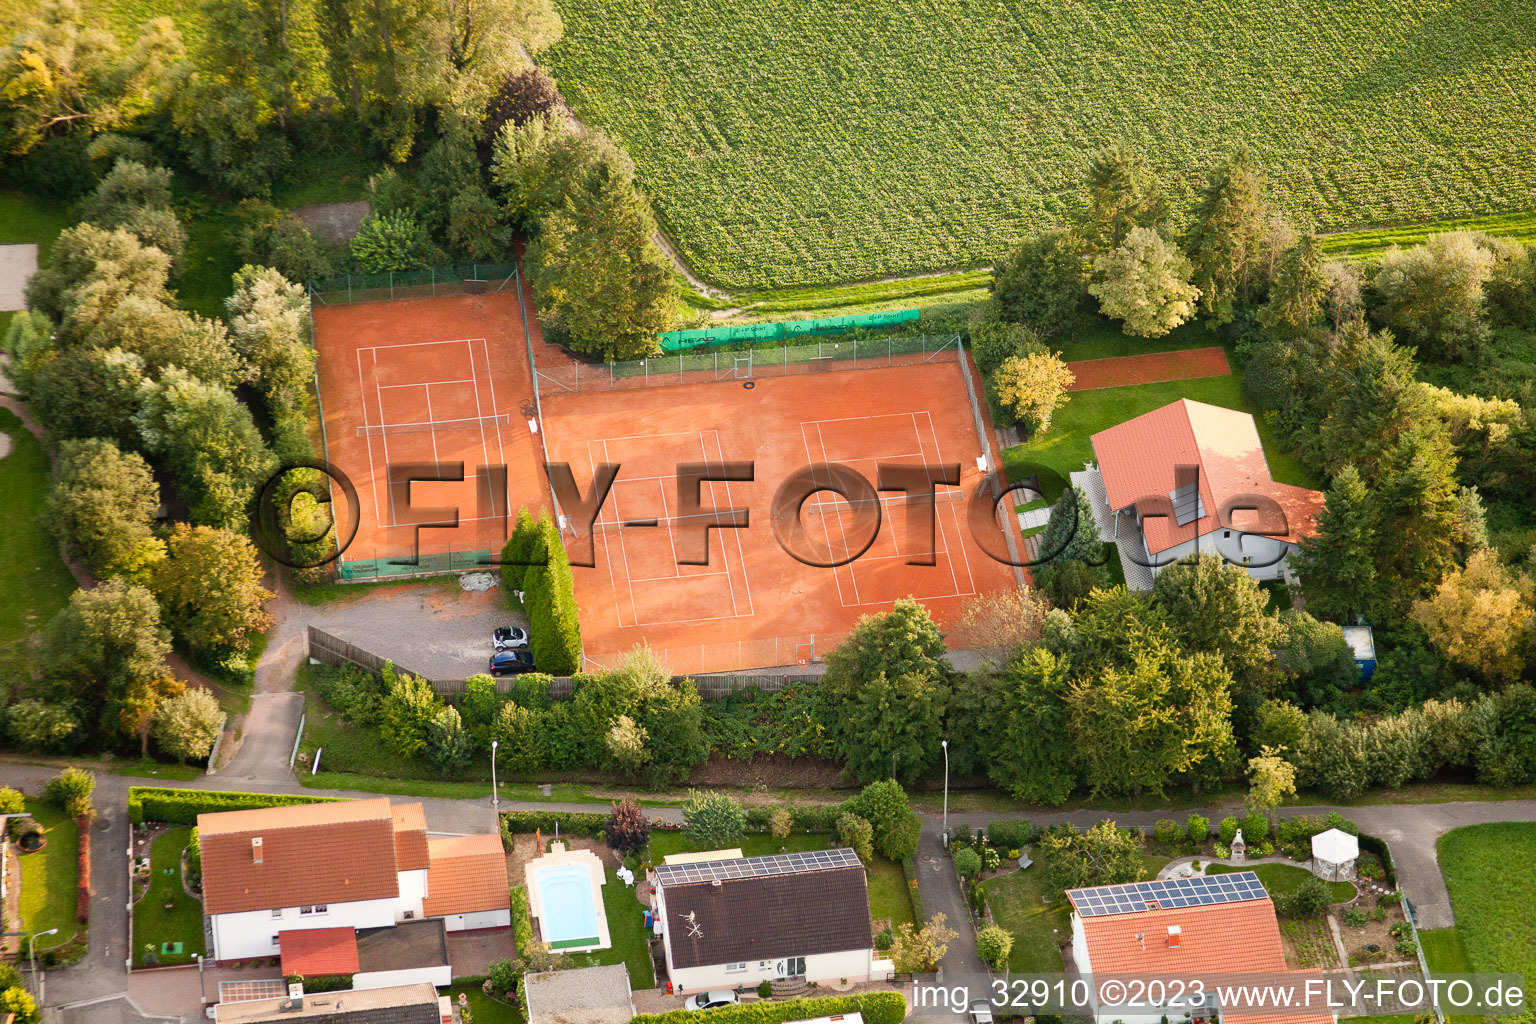 Tennis club Blau-Weiß Insheim eV in Insheim in the state Rhineland-Palatinate, Germany